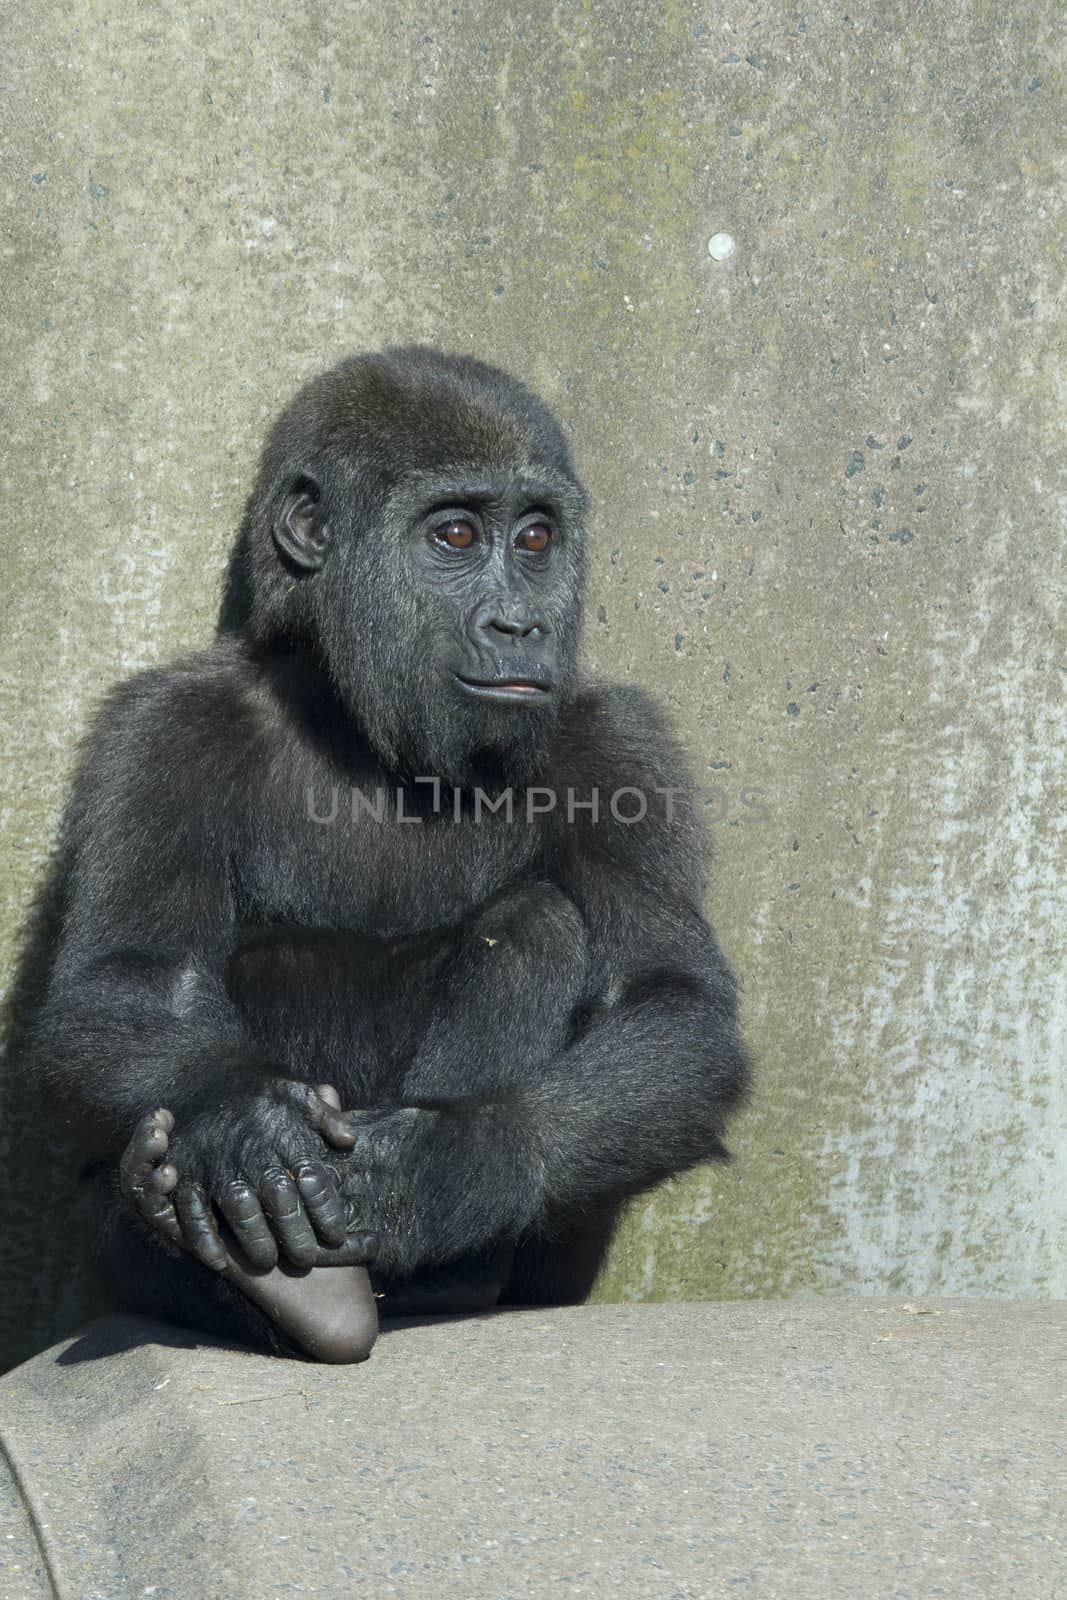 A baby female gorilla sitting on concrete